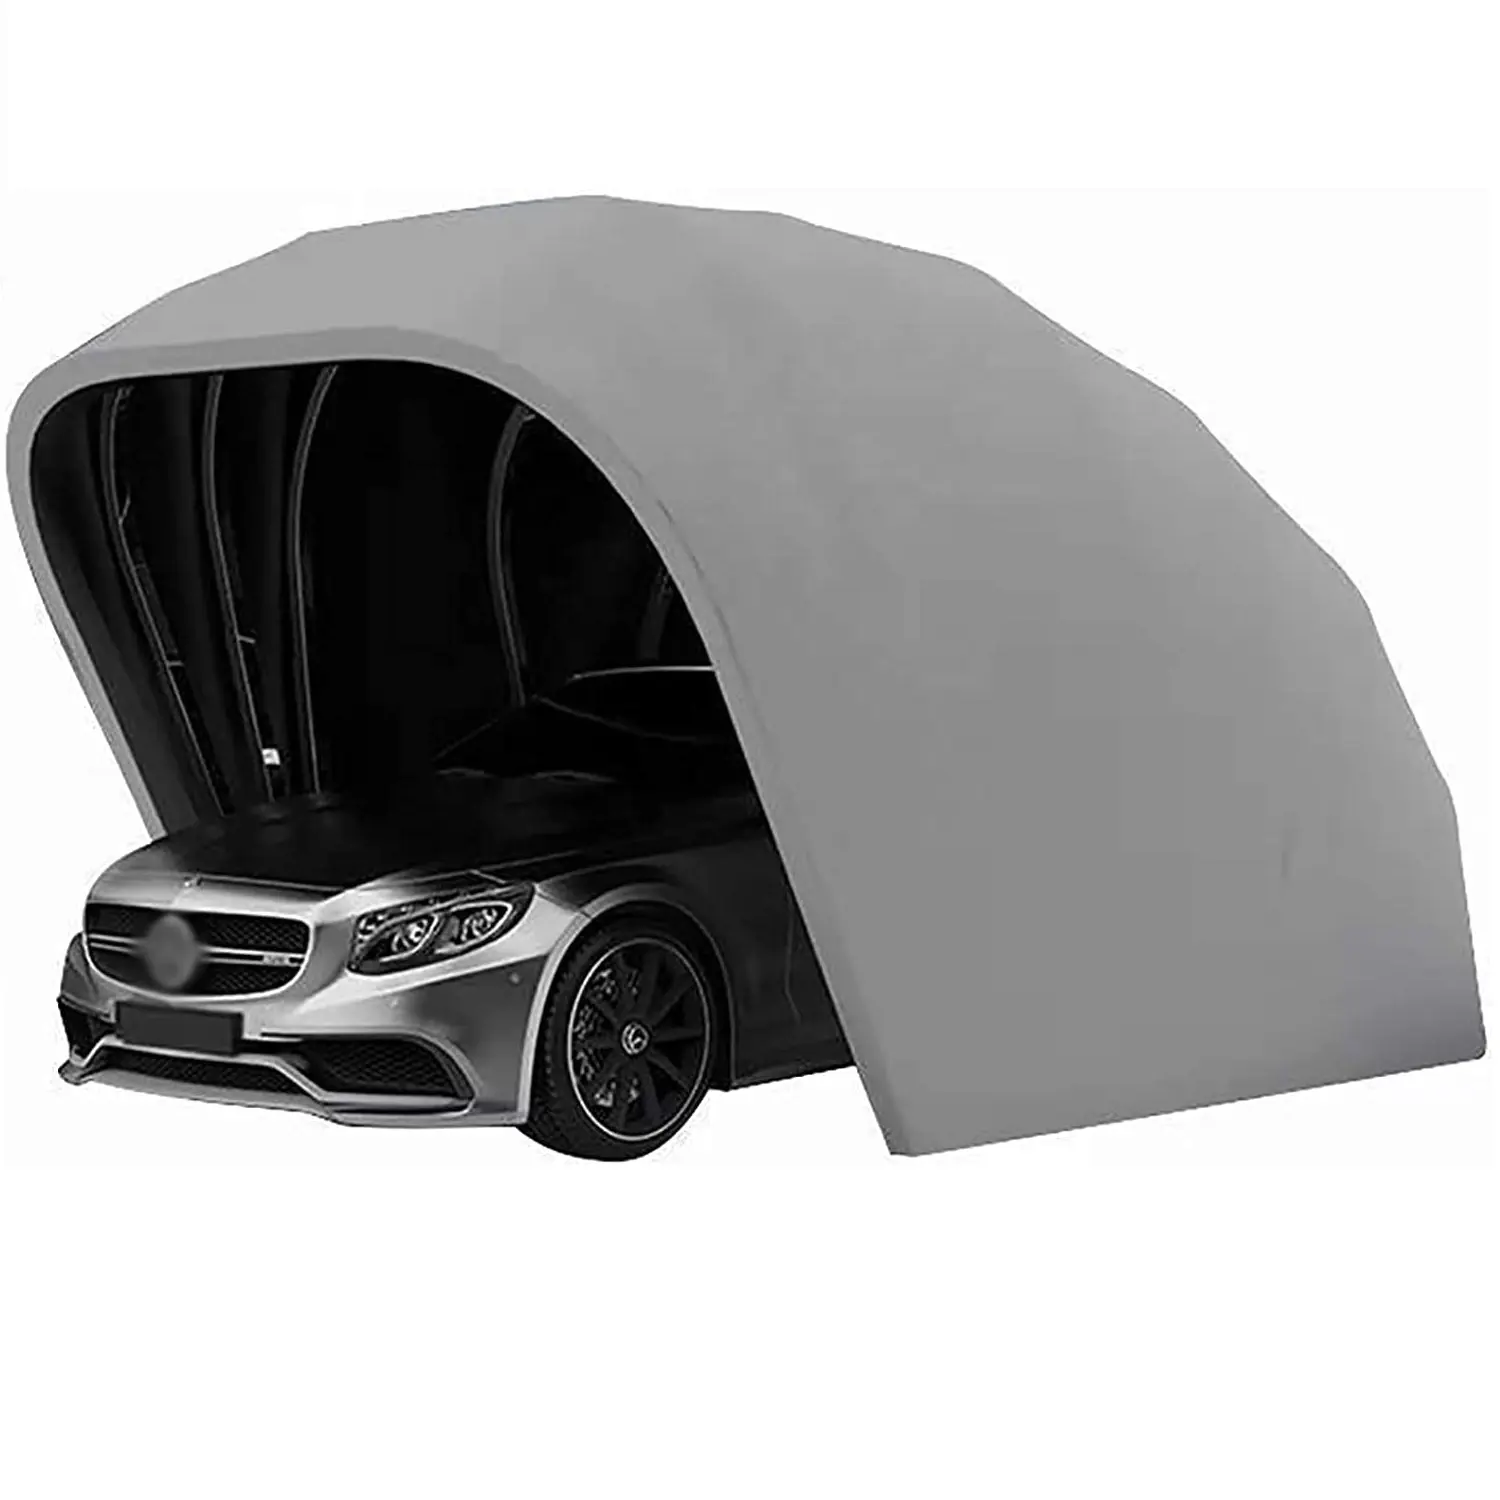 टिकाऊ foldable गार्डन कार पोर्ट गेराज शेड आश्रय चंदवा तम्बू इस्पात संरचना डिजाइन